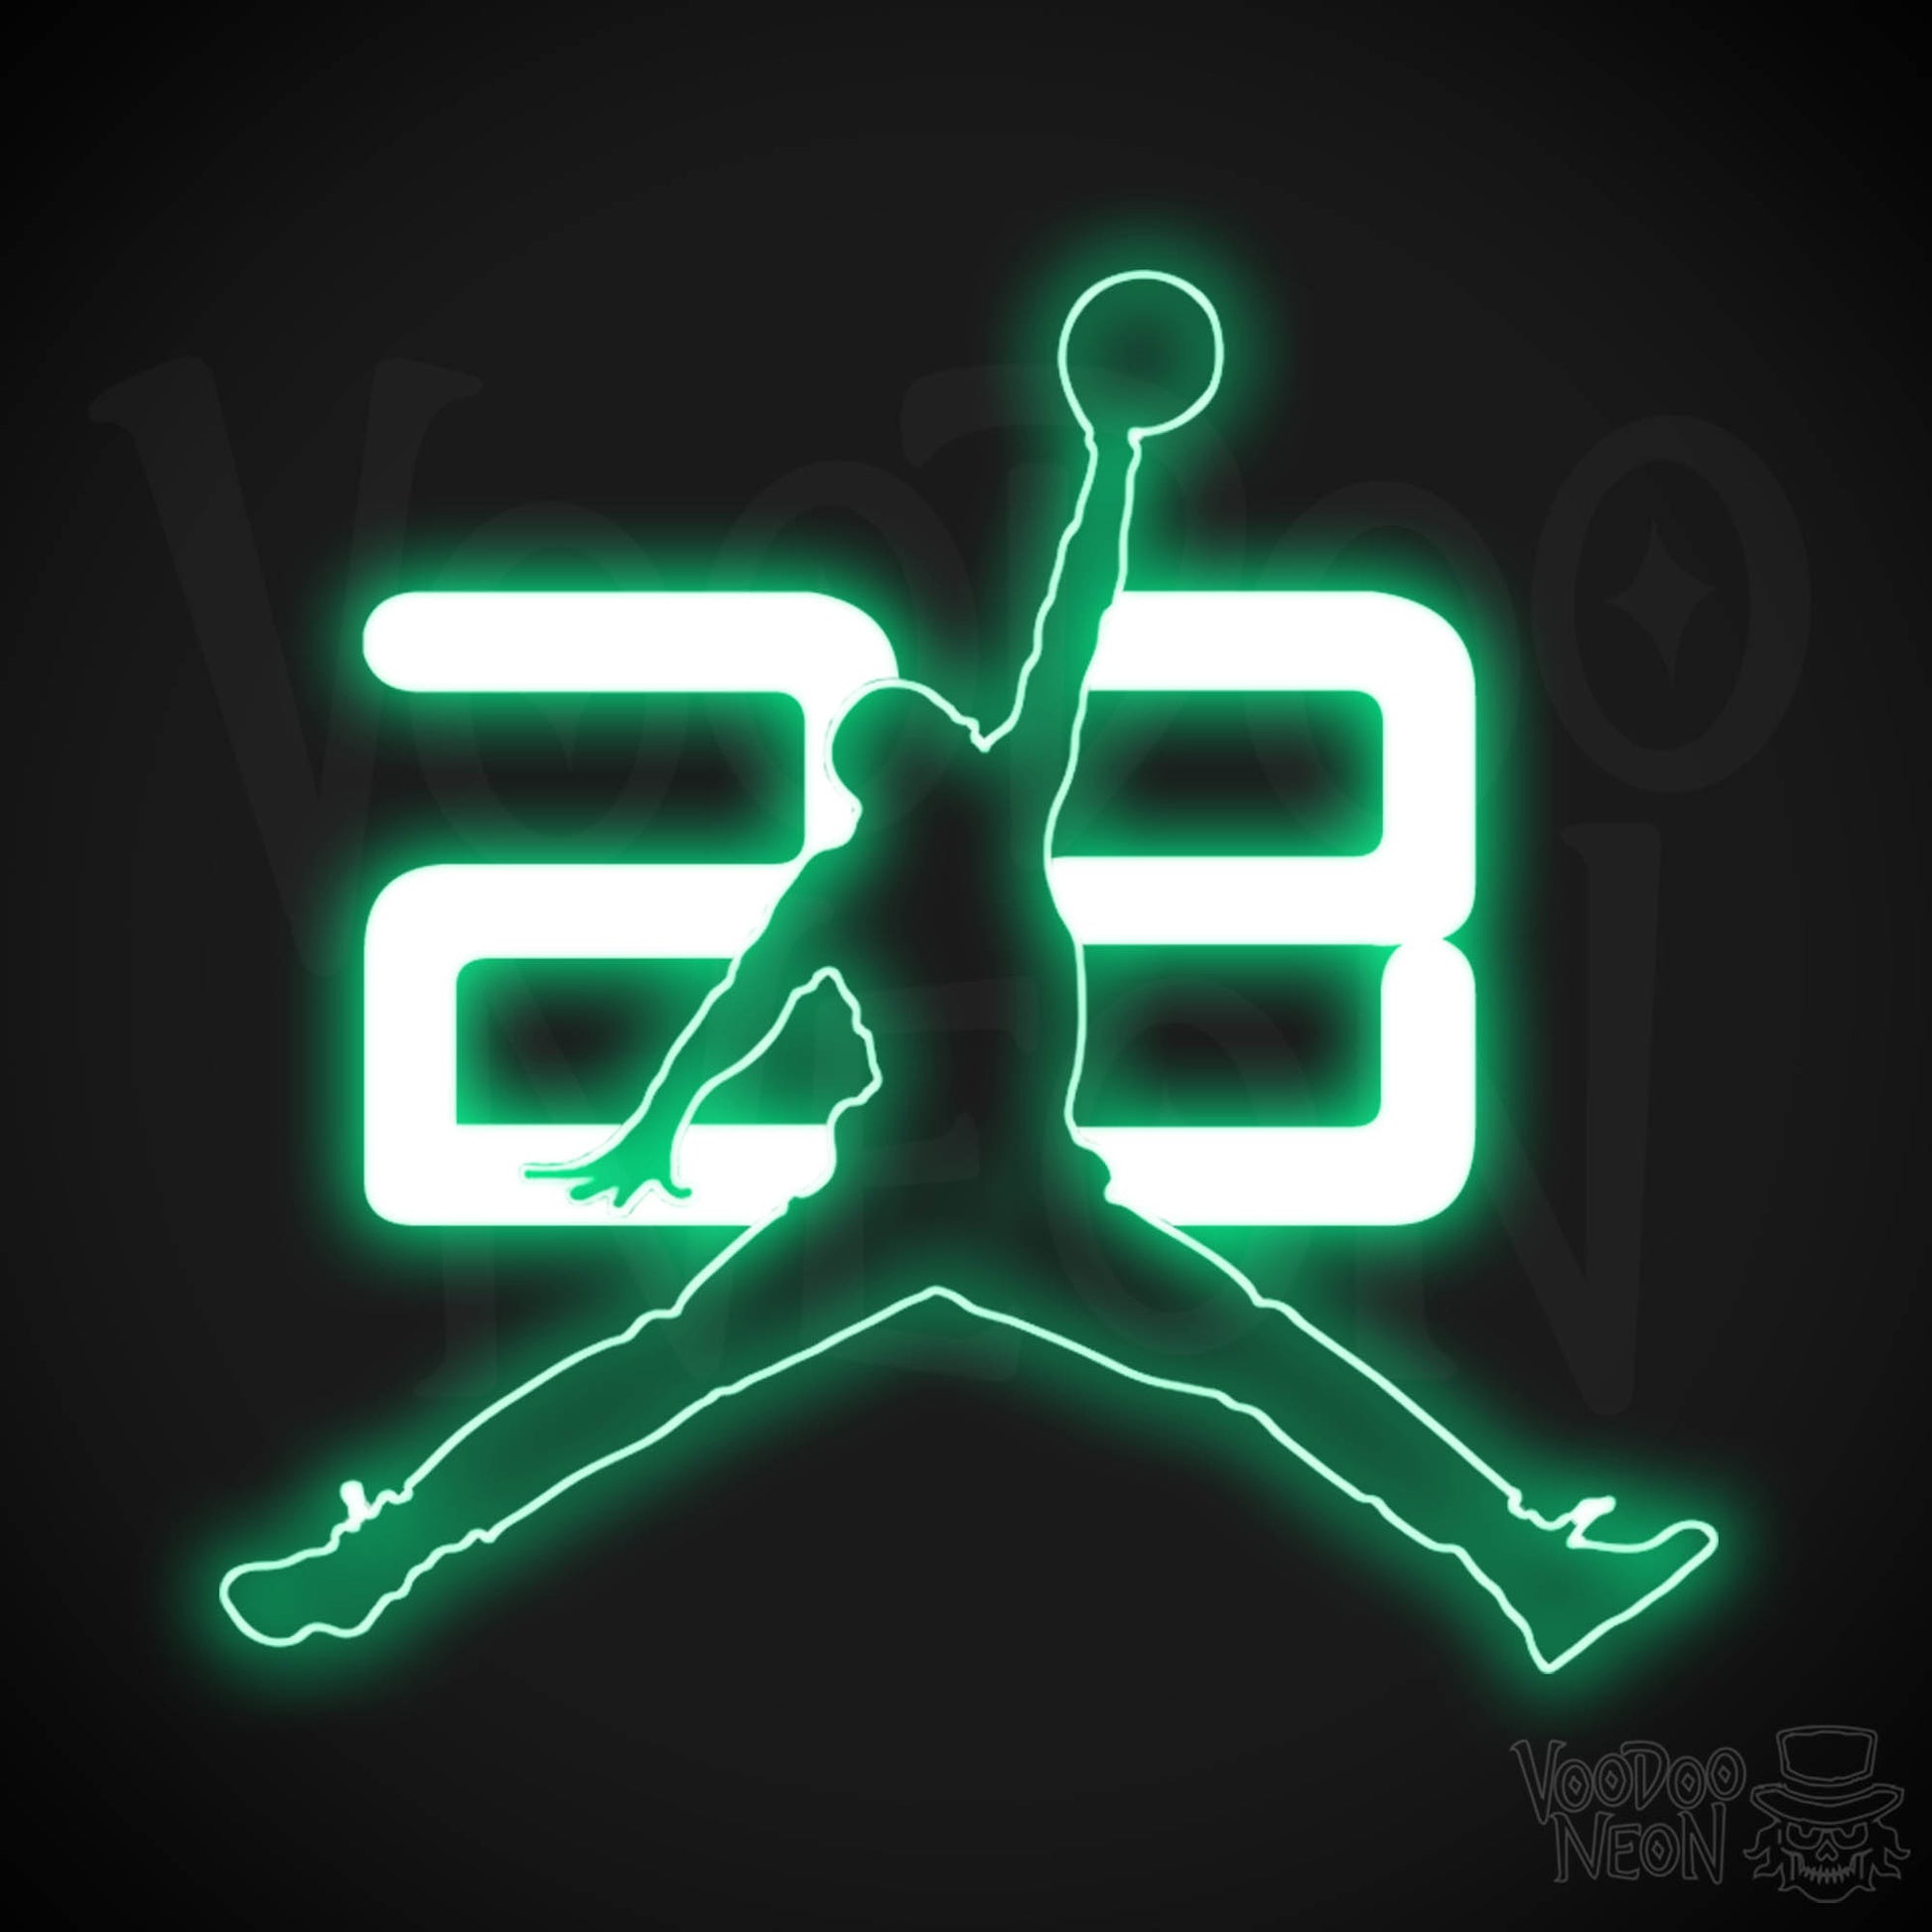 Neon Jordan Dunk - Michael Jordan Neon Wall Art - Neon Basketball Dunk Sign - Color Green